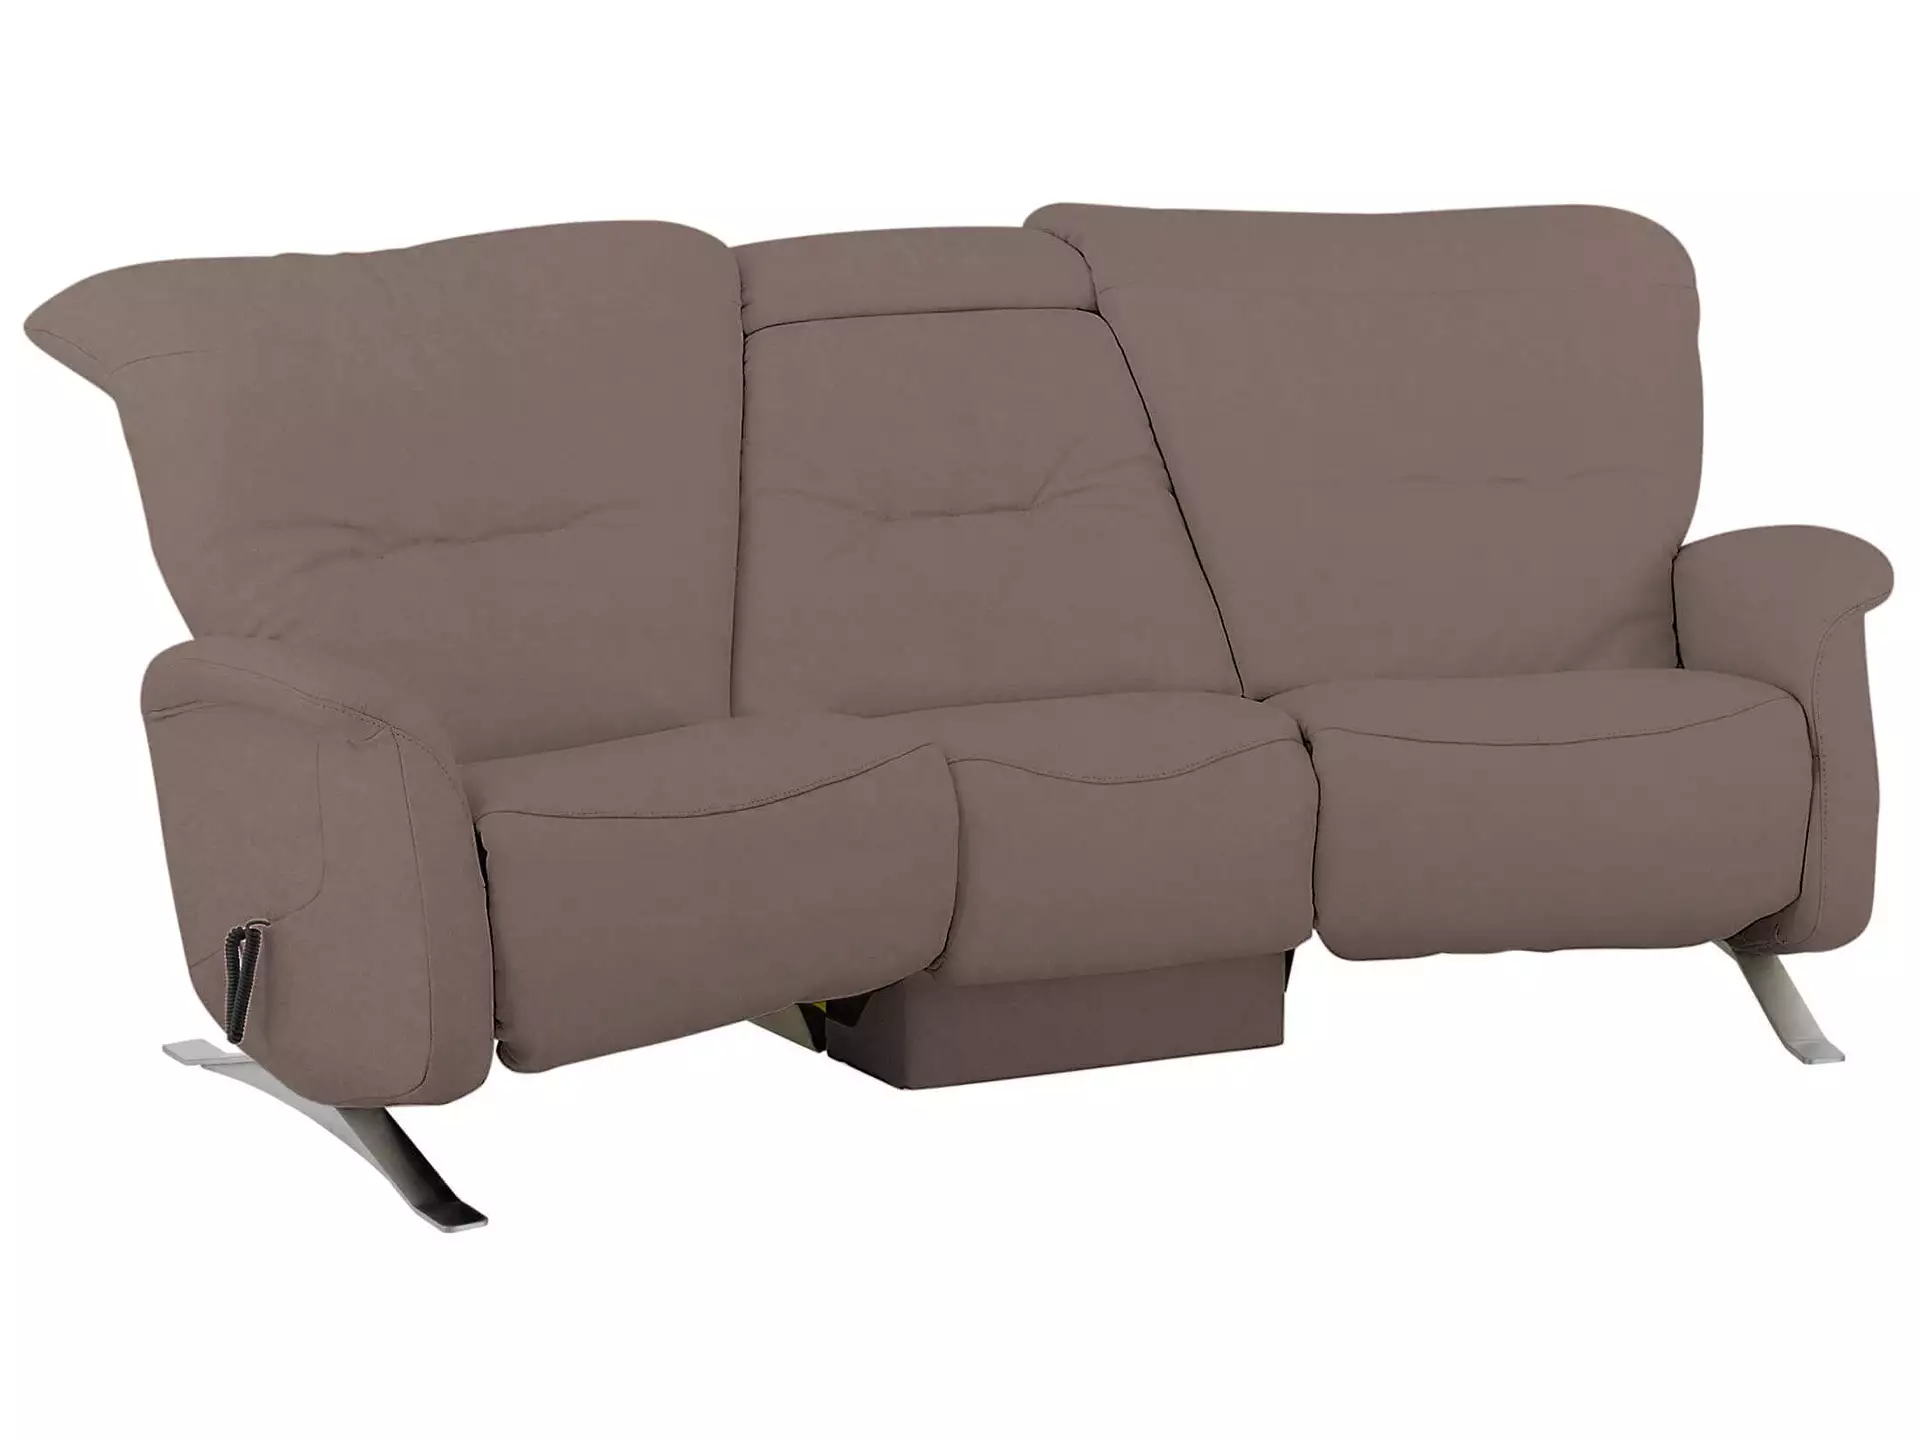 Sofa Calea Basic Himolla / Farbe: Schlamm / Material: Stoff Basic